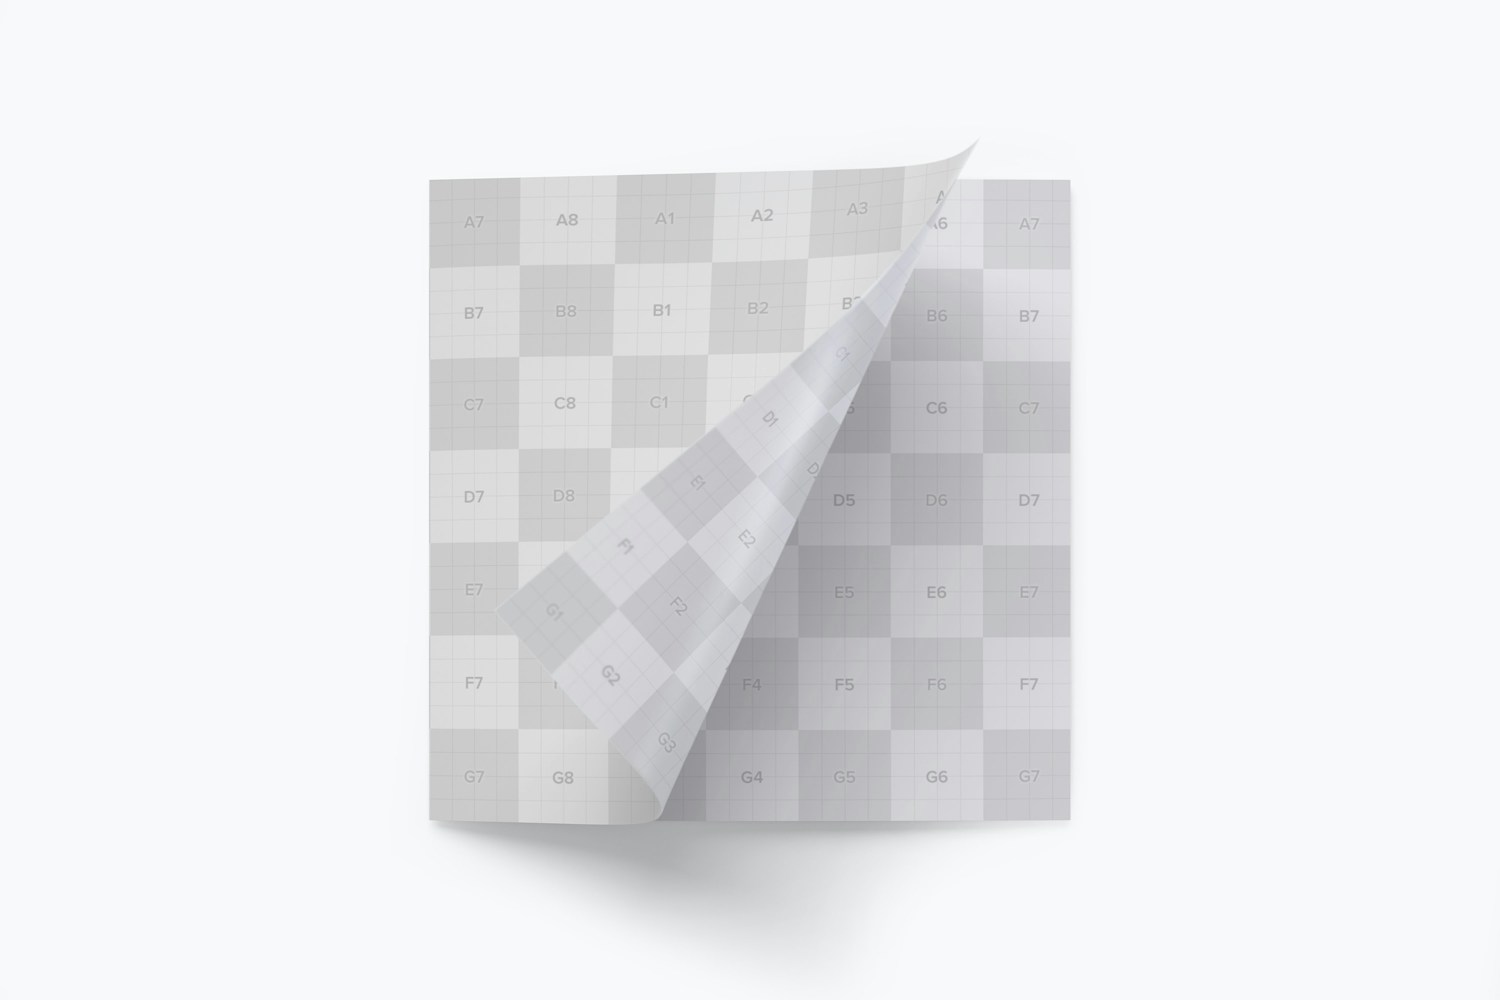 Square Tri-Fold Brochure Mockup 03